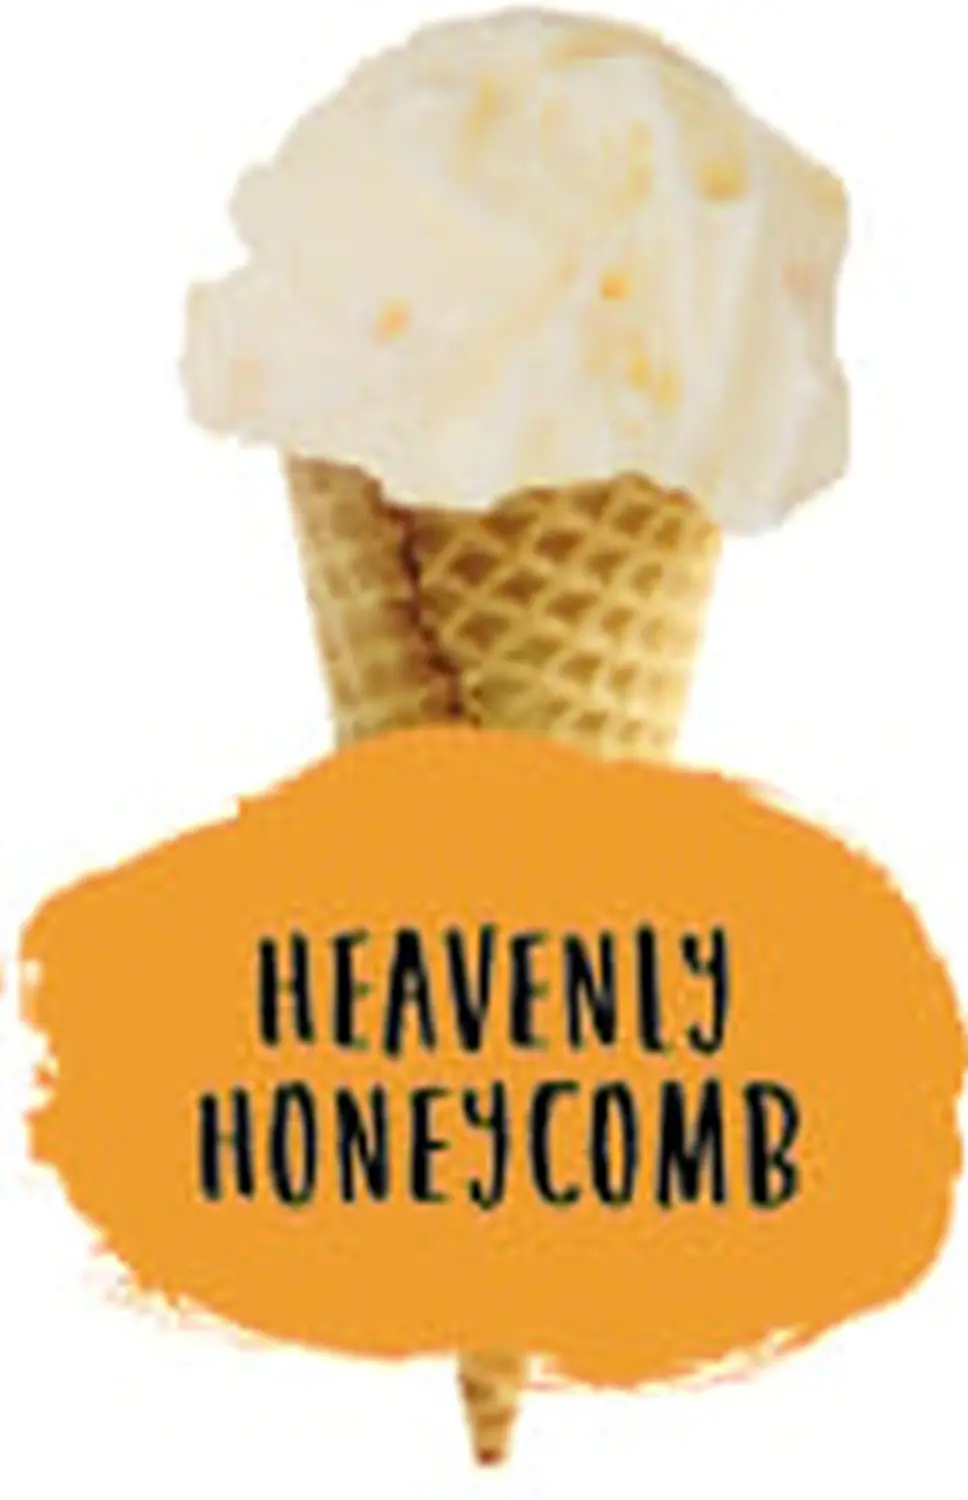 Sevanetti Heavenly honeycomb Ice Cream